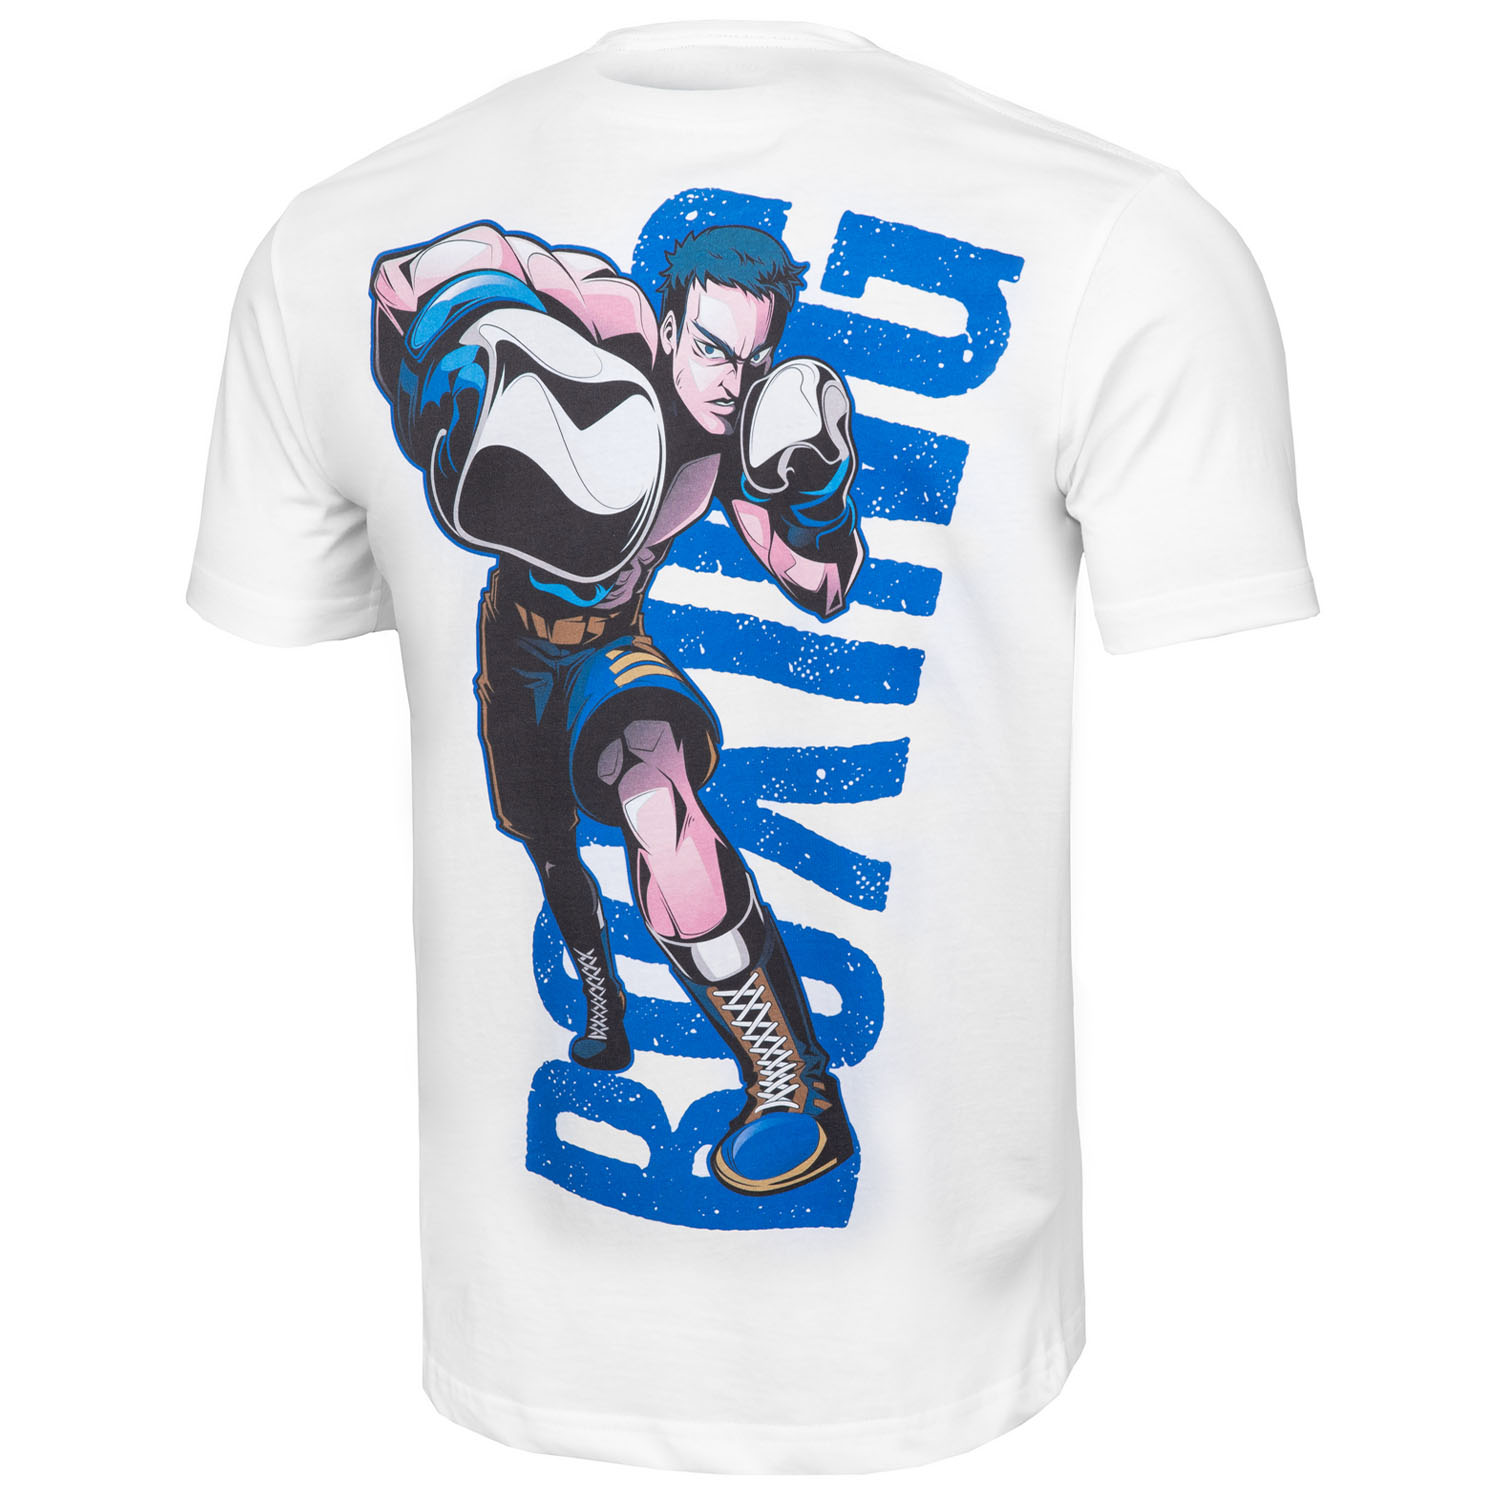 Pit Bull | S S Champion, weiß, 1341605-1 | T-Shirt, Coast West Boxing